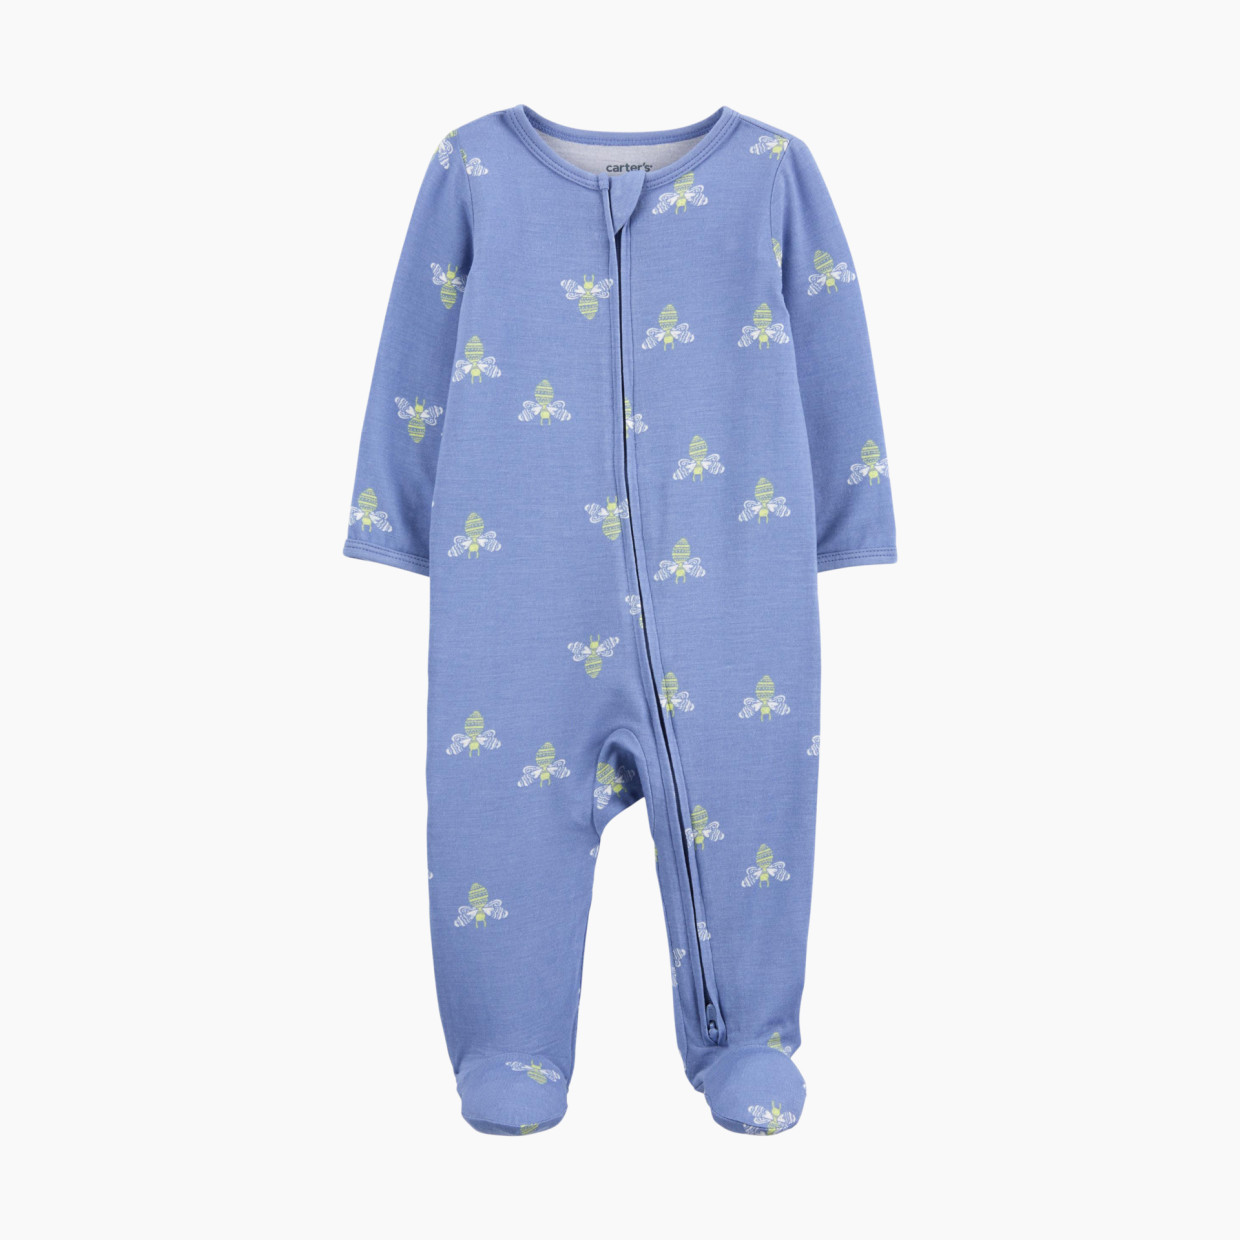 Carter's 2-Way Zip Lenzing Ecovera Sleep & Play Pajamas - Blue Bees, 3 M.